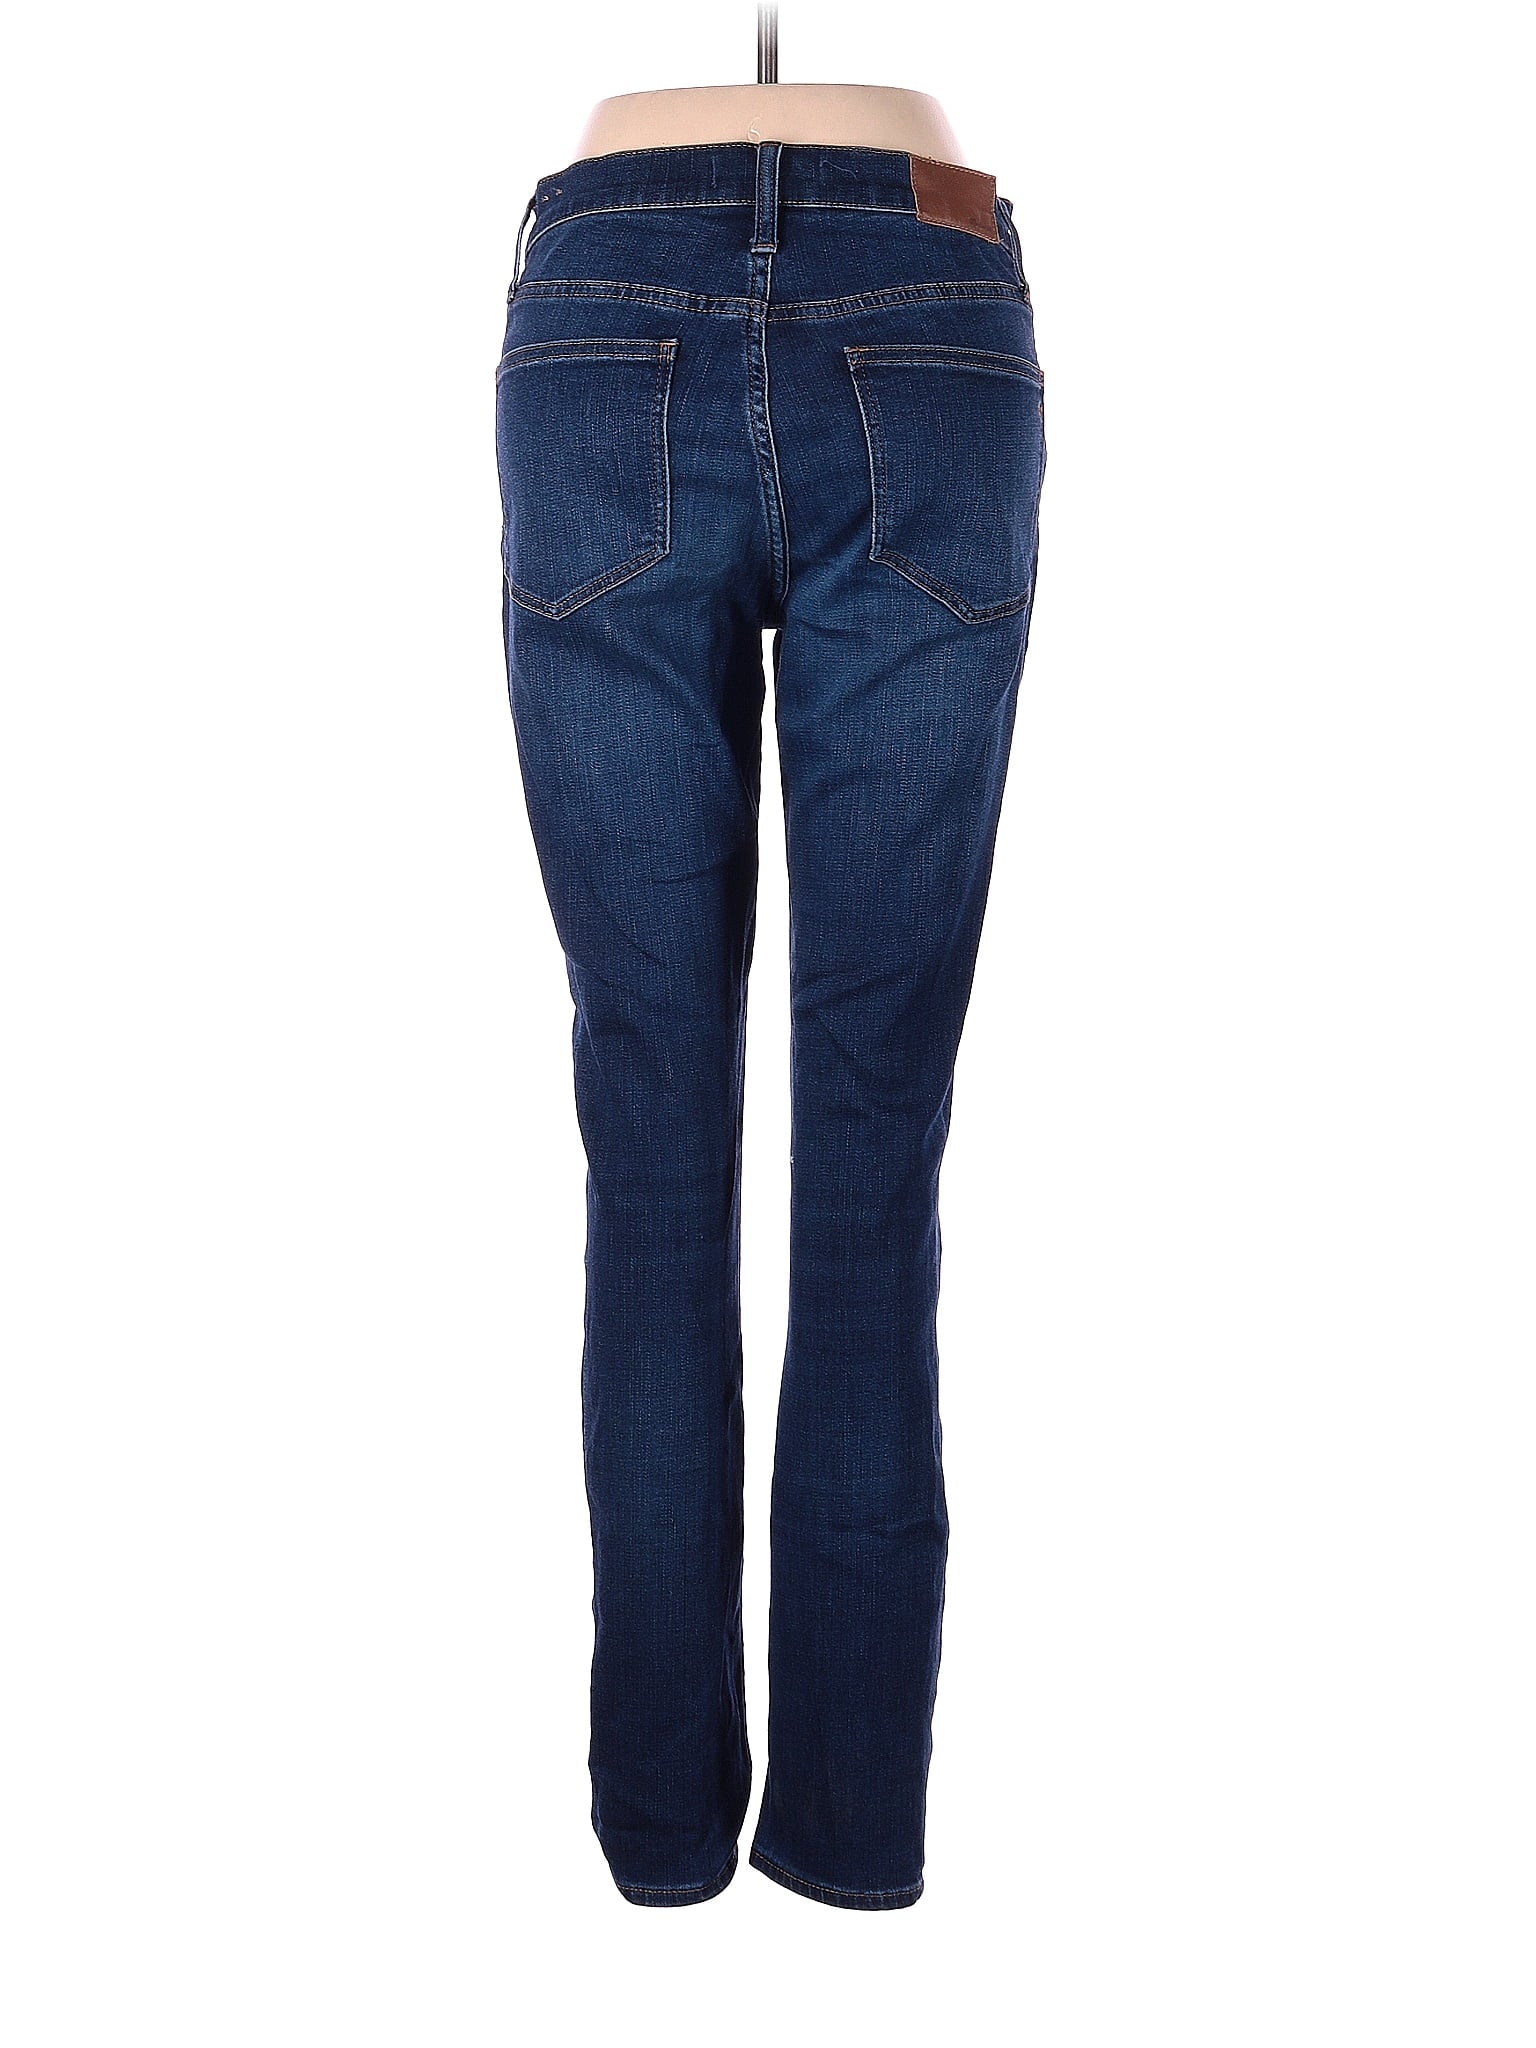 High-Rise Boyjeans Roadtripper Jeans In Jansen Wash in Dark Wash waist size - 28